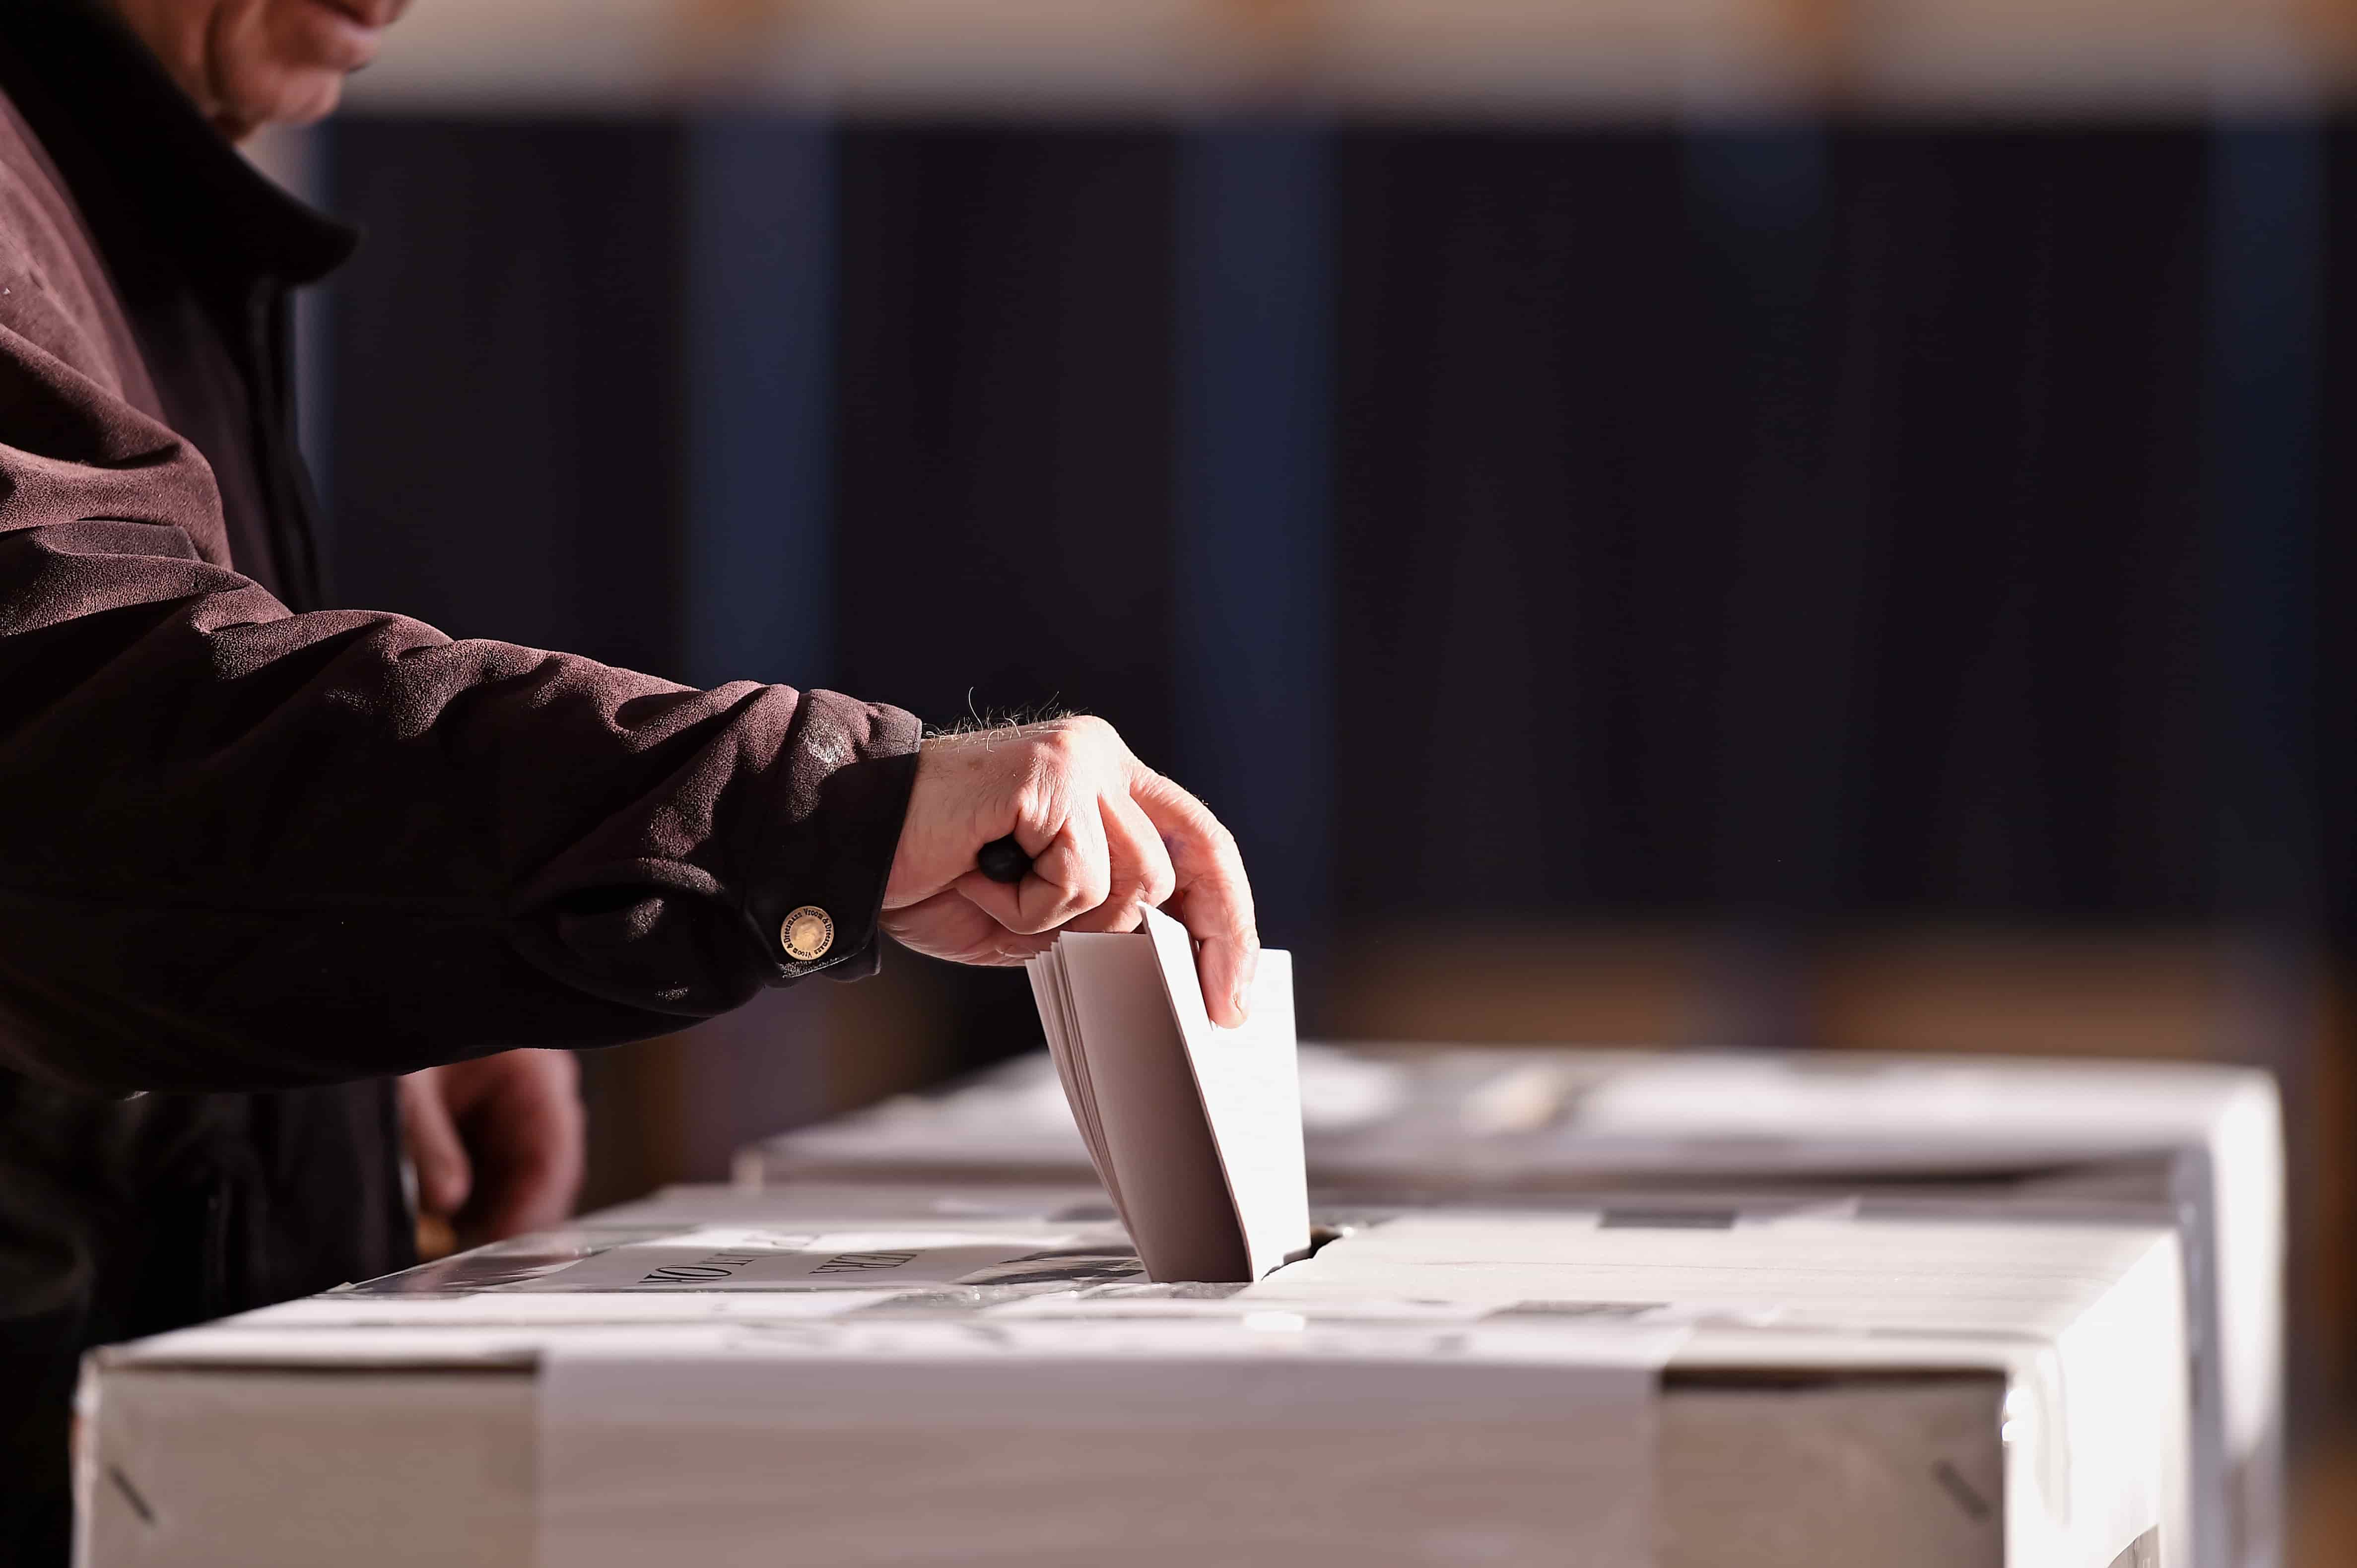 Hand casting a vote at ballot box